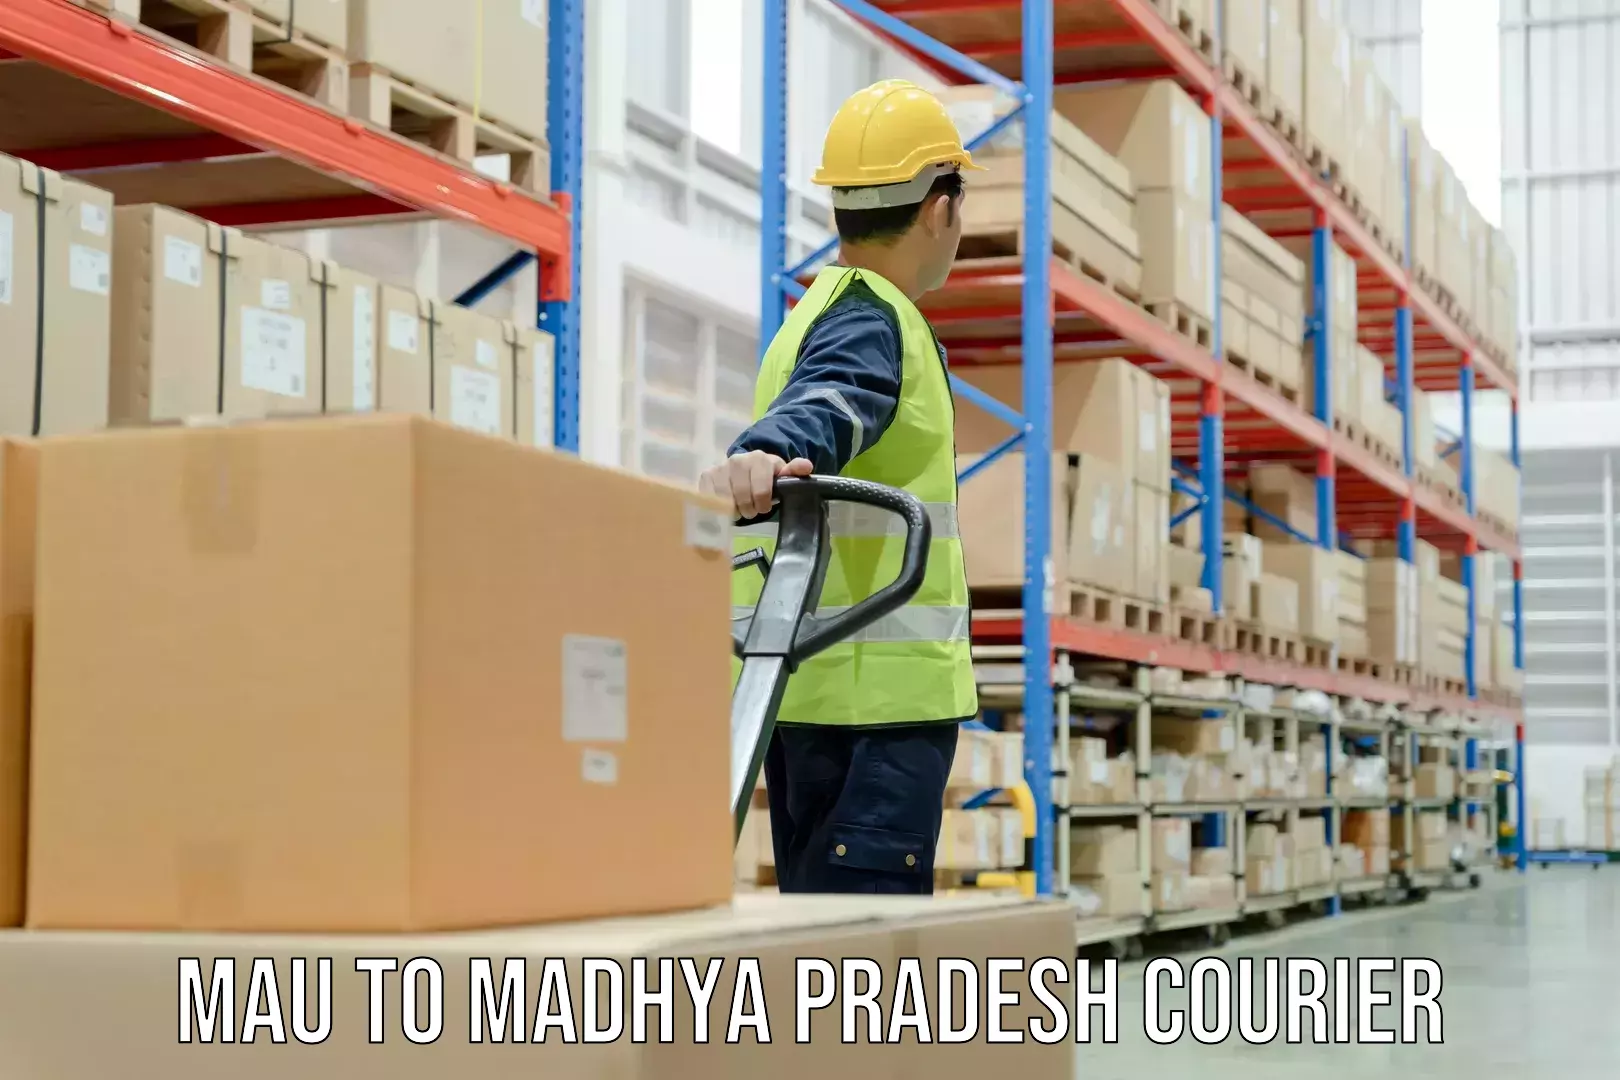 Custom courier packaging in Mau to Madhya Pradesh